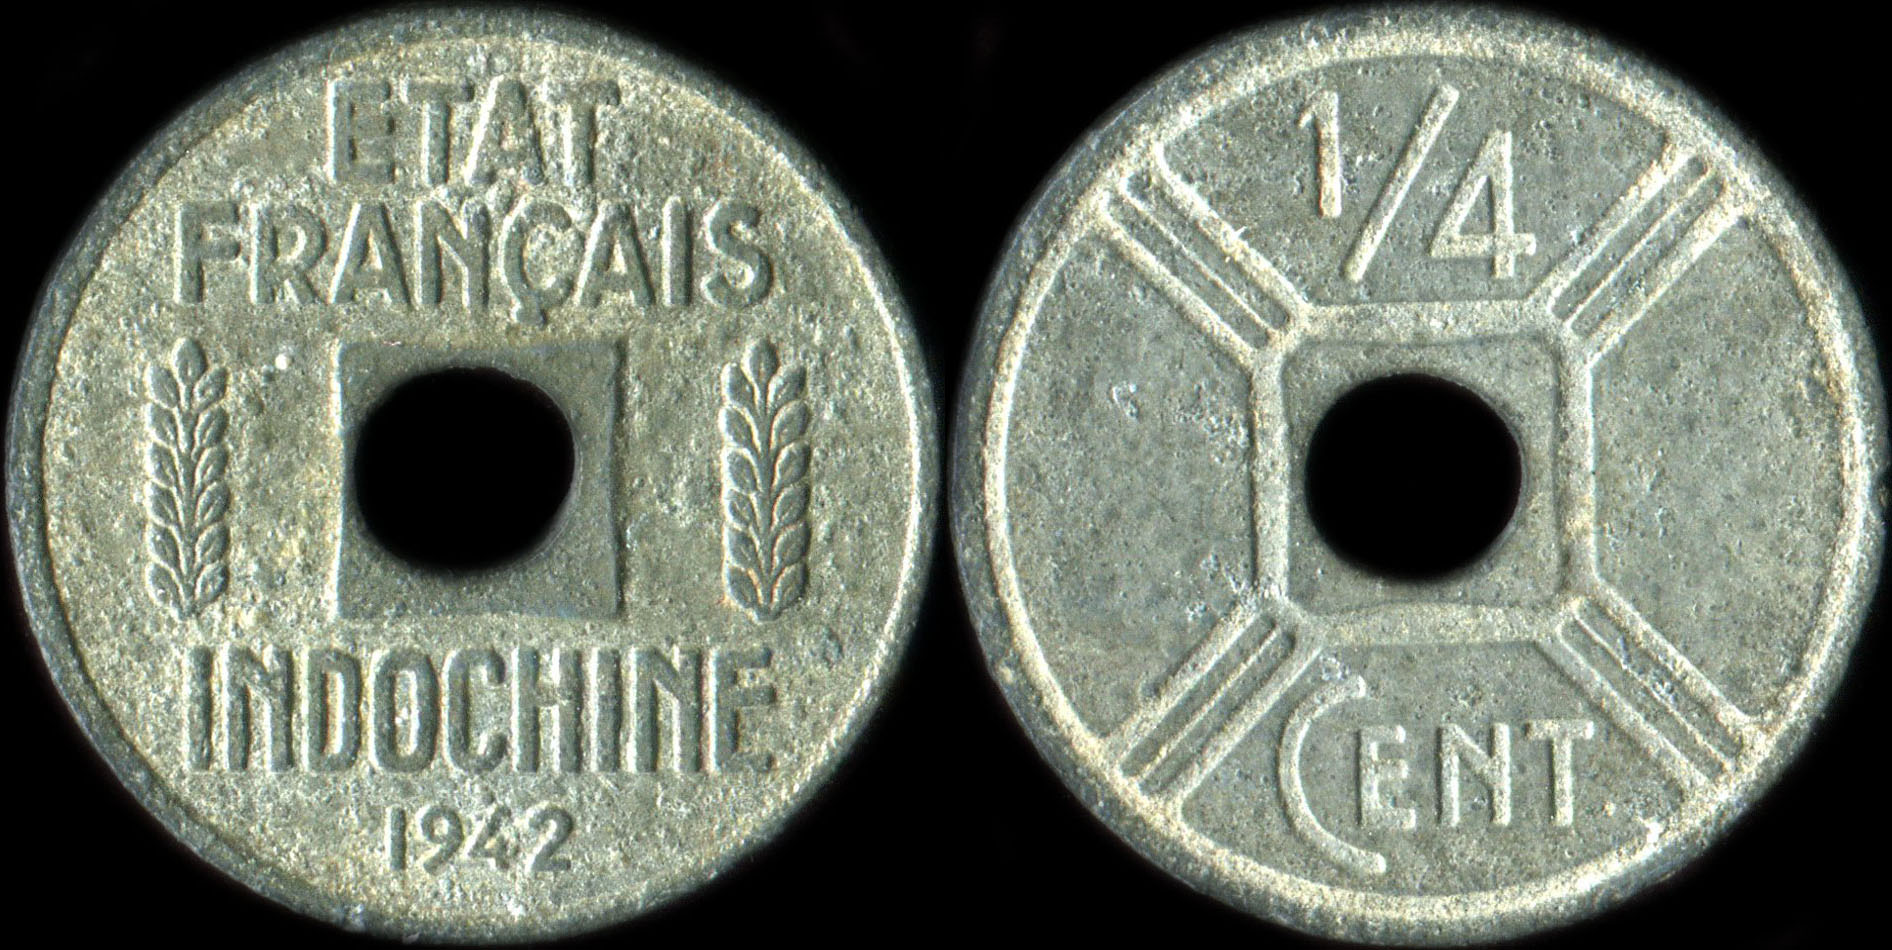 Pice de ¼ cent Indochine 1942